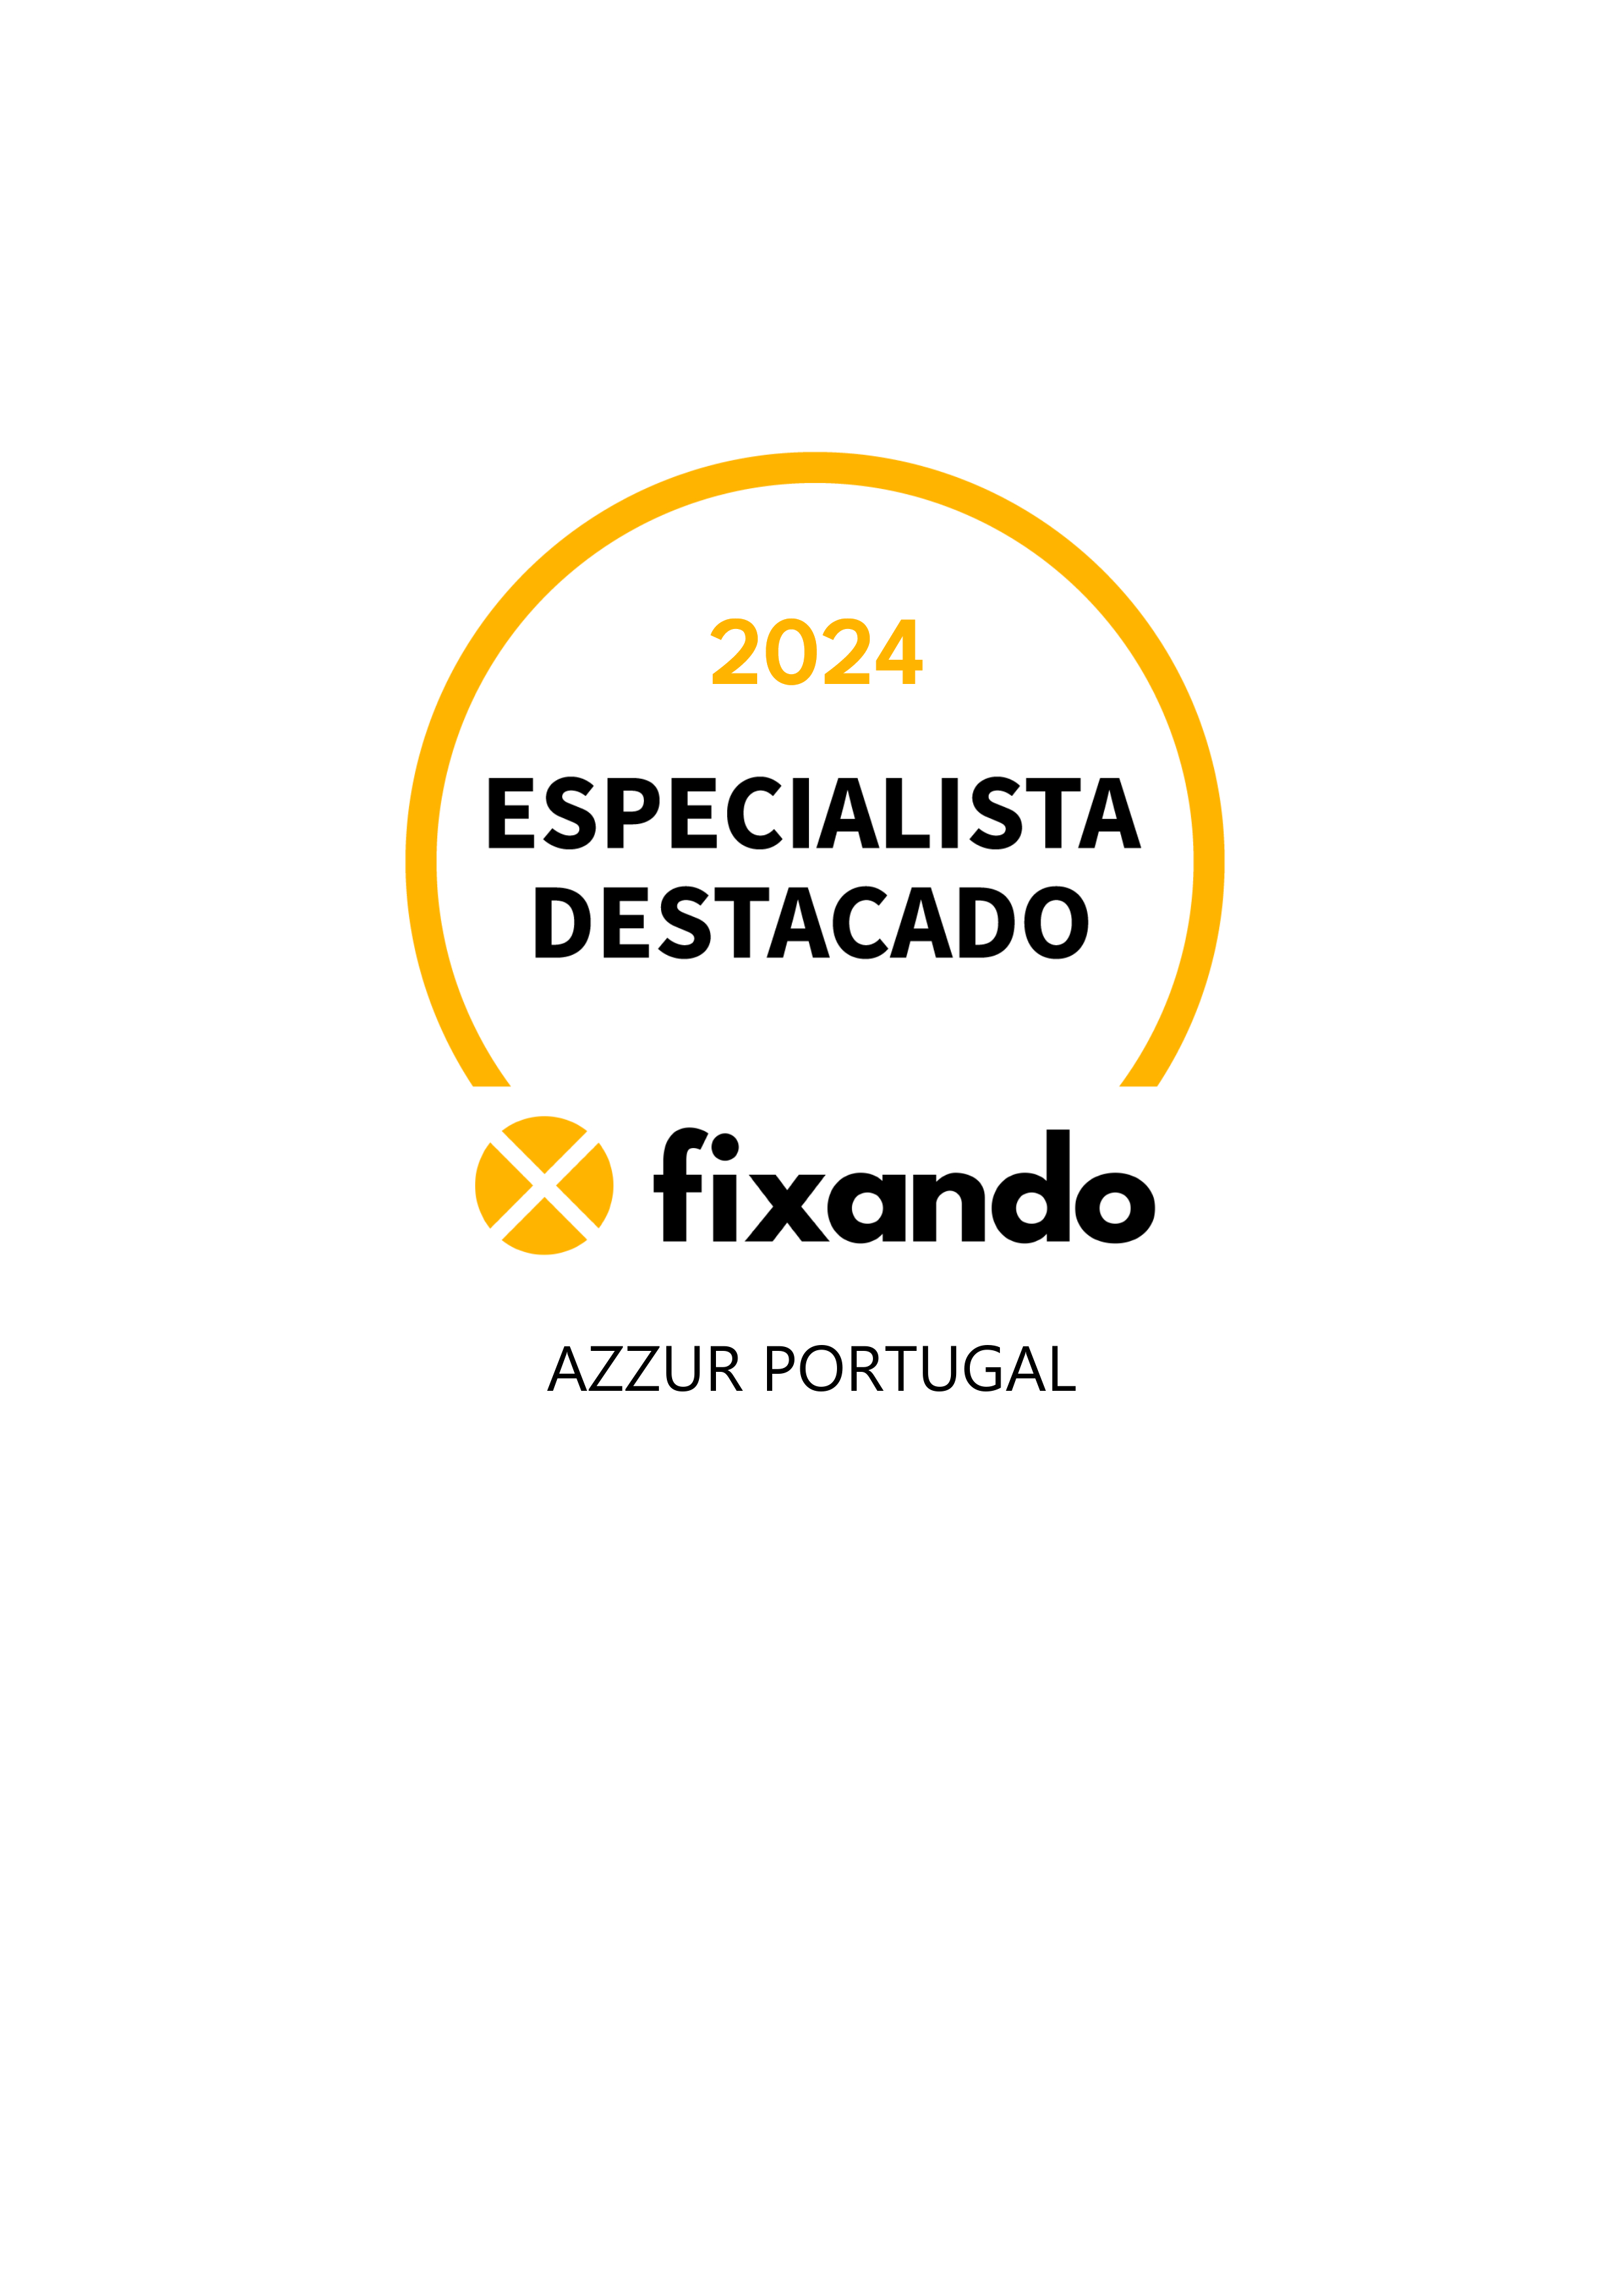 AZZUR PORTUGAL - Lisboa - Suporte Administrativo